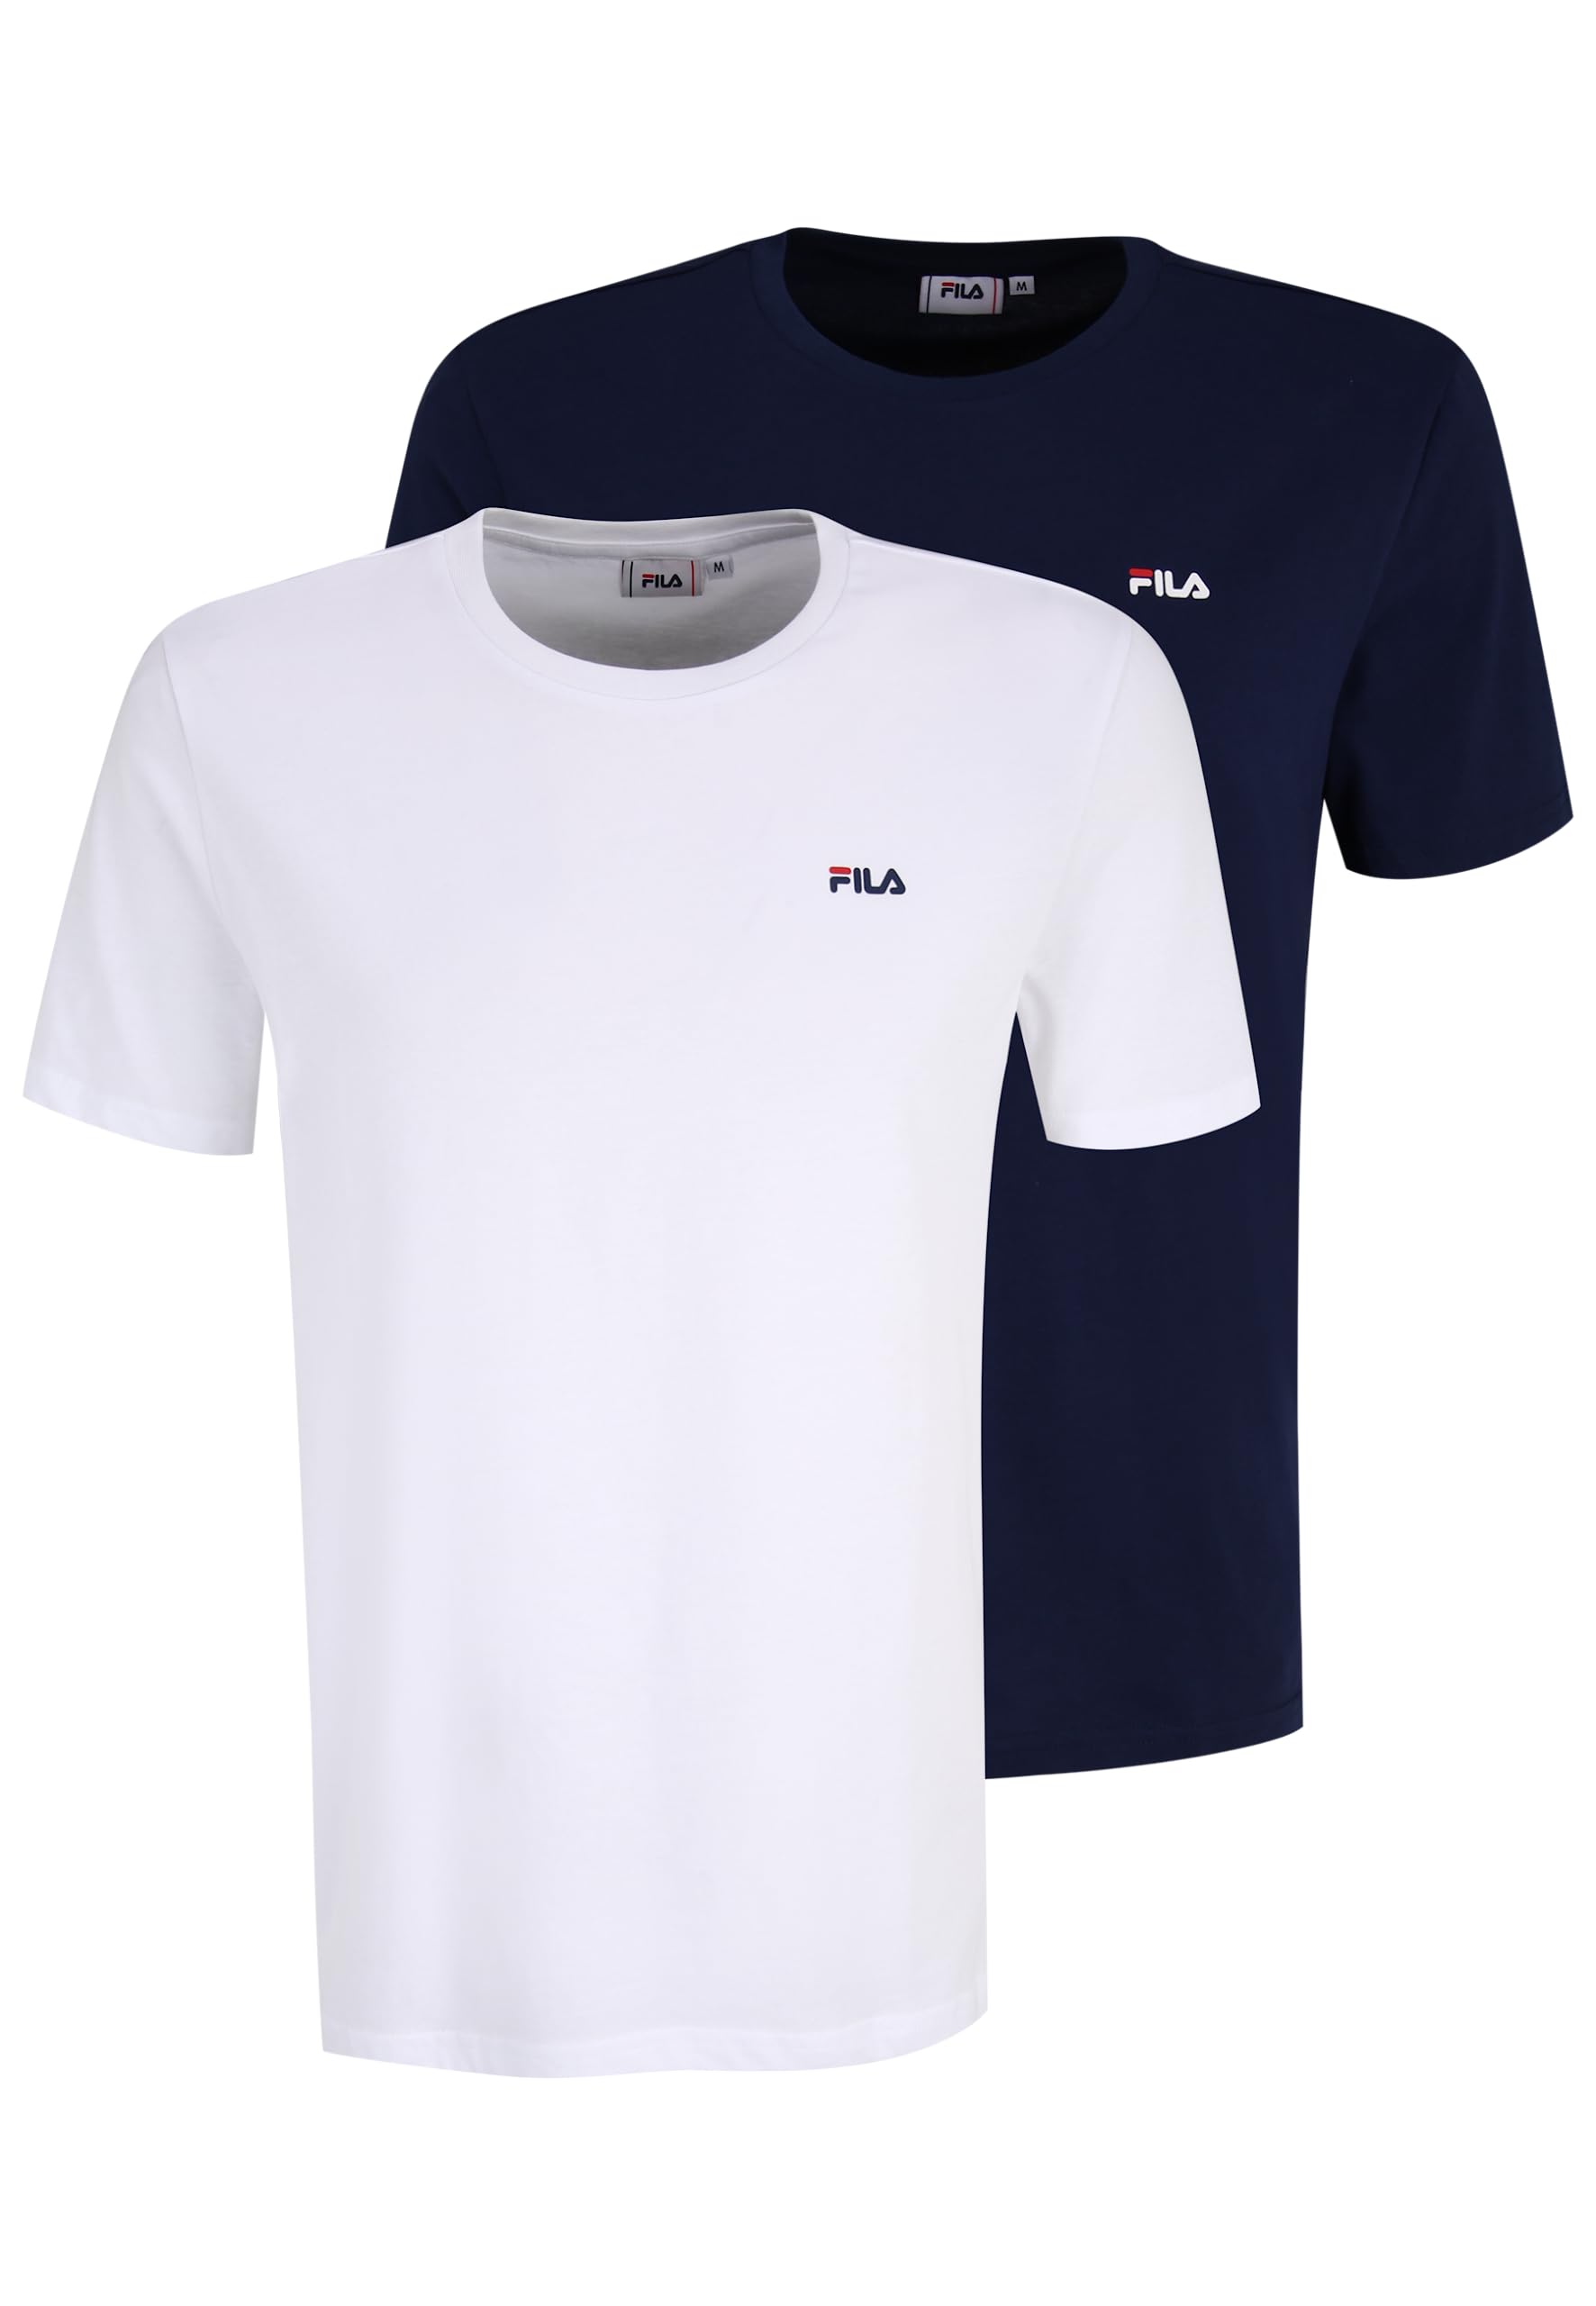 FILA Herren Brod Thee/Dubbel Pack T Shirt, Bright White-medieval Blue, XL EU